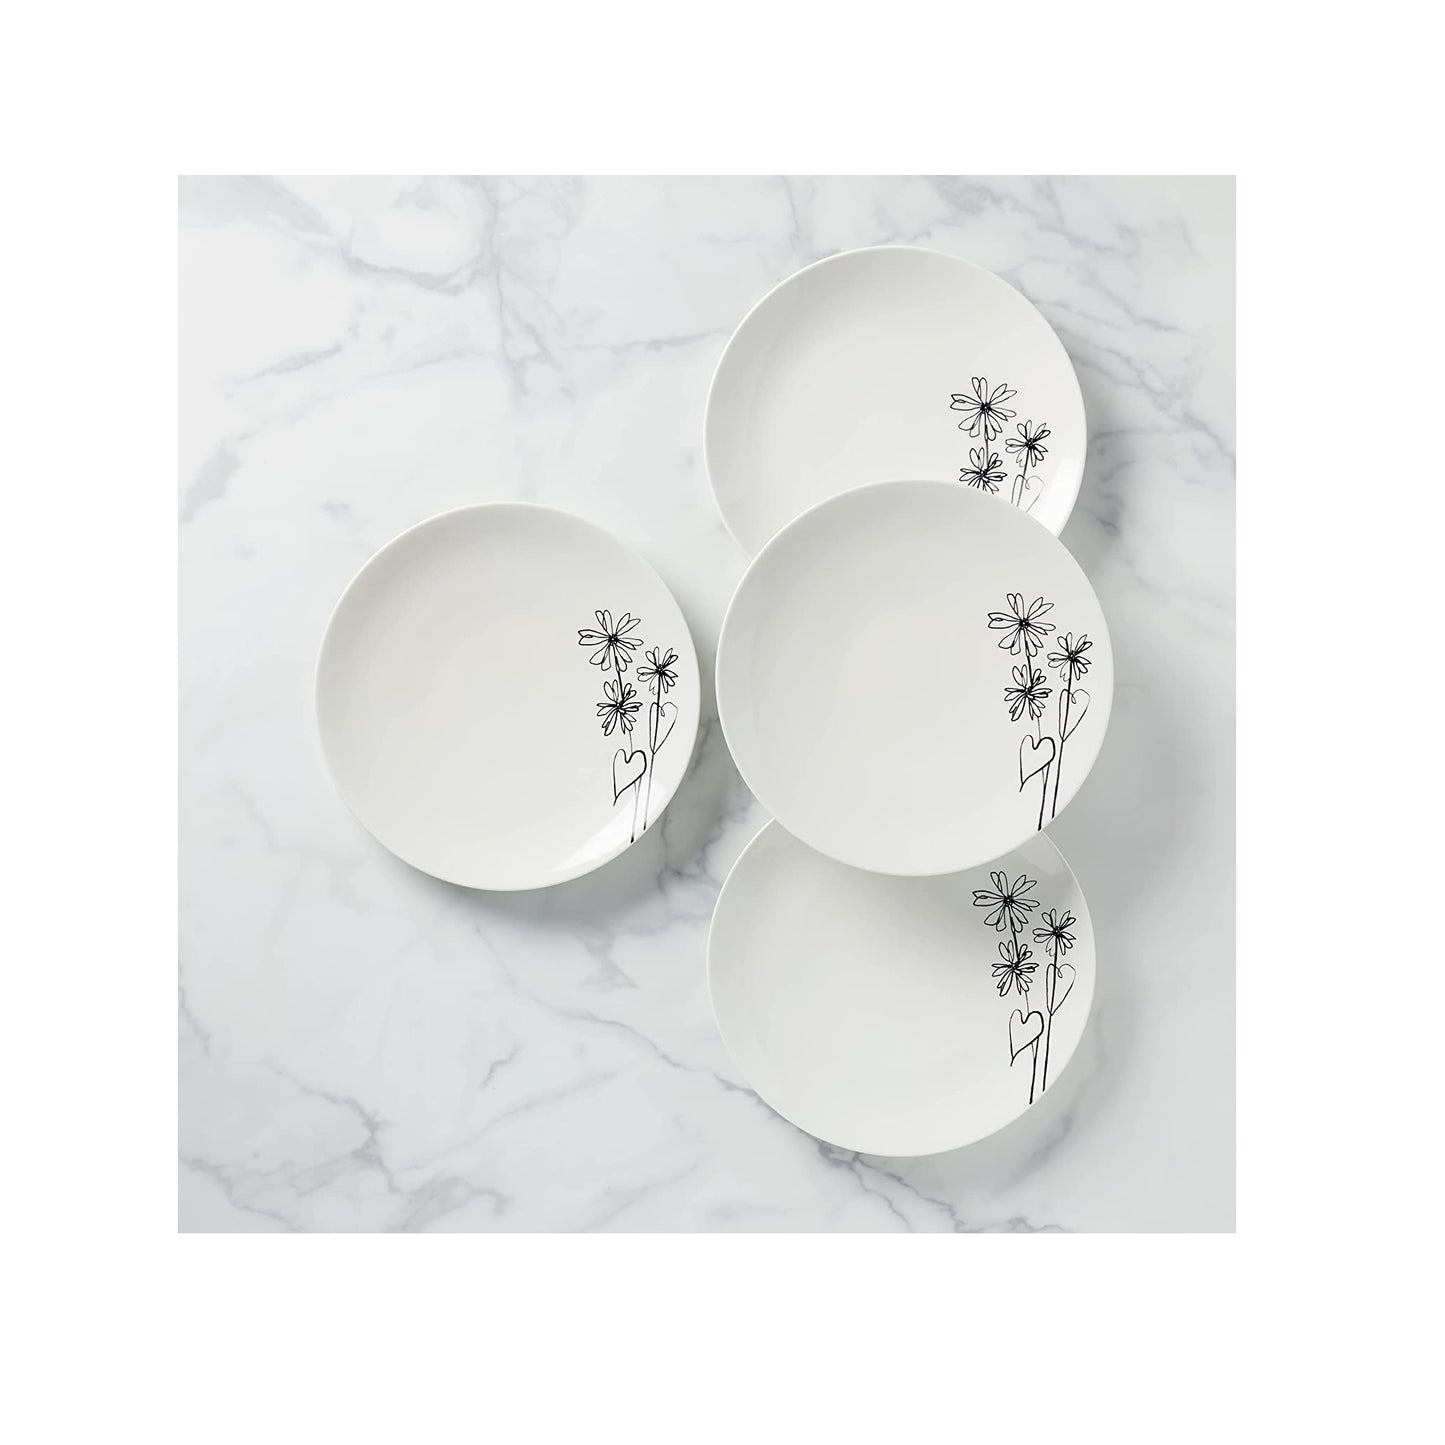 Kate Spade New York Garden Doodle Dinner Plates in White set of 4 by Lenox